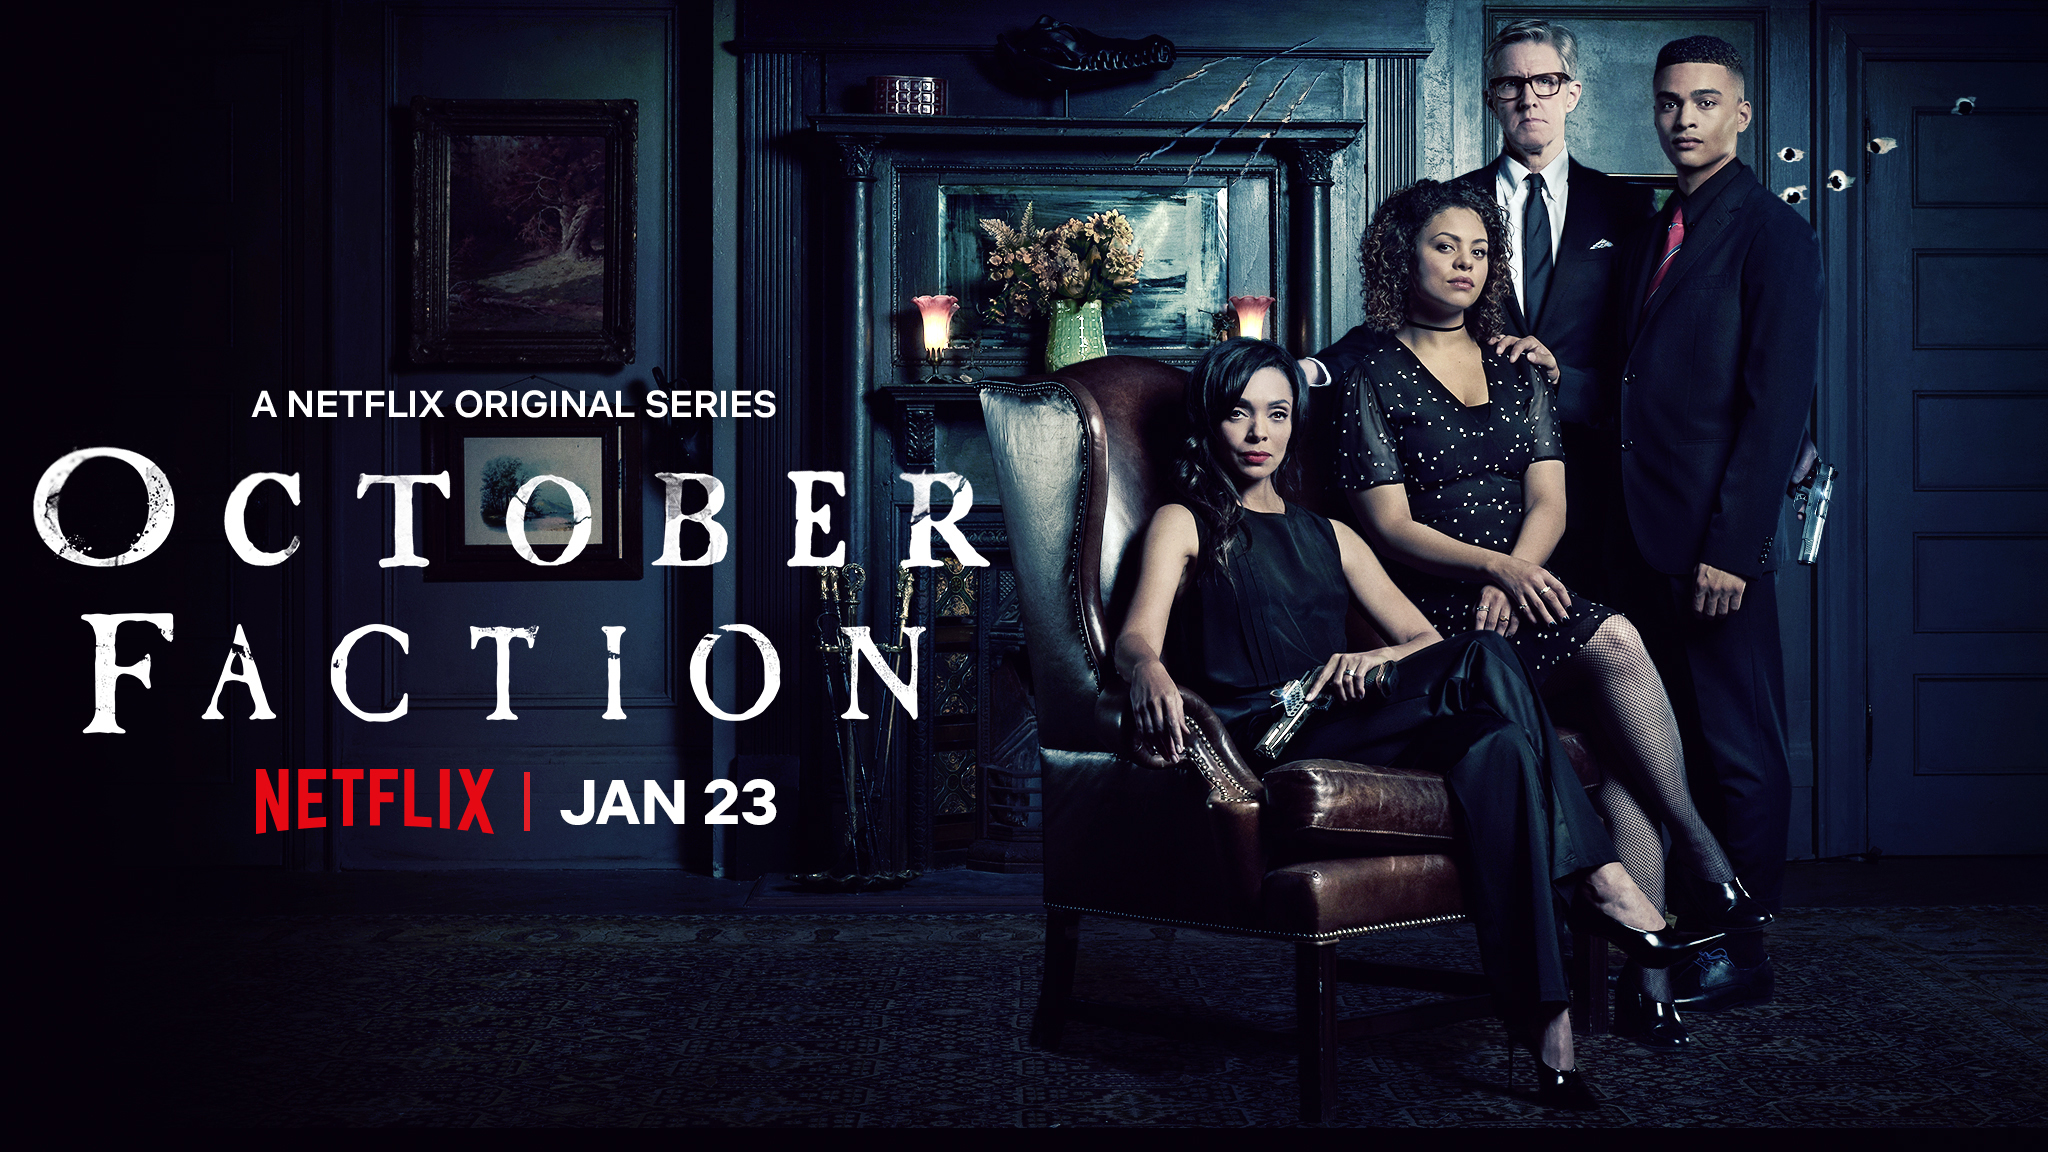 October Faction [credit: Netflix]